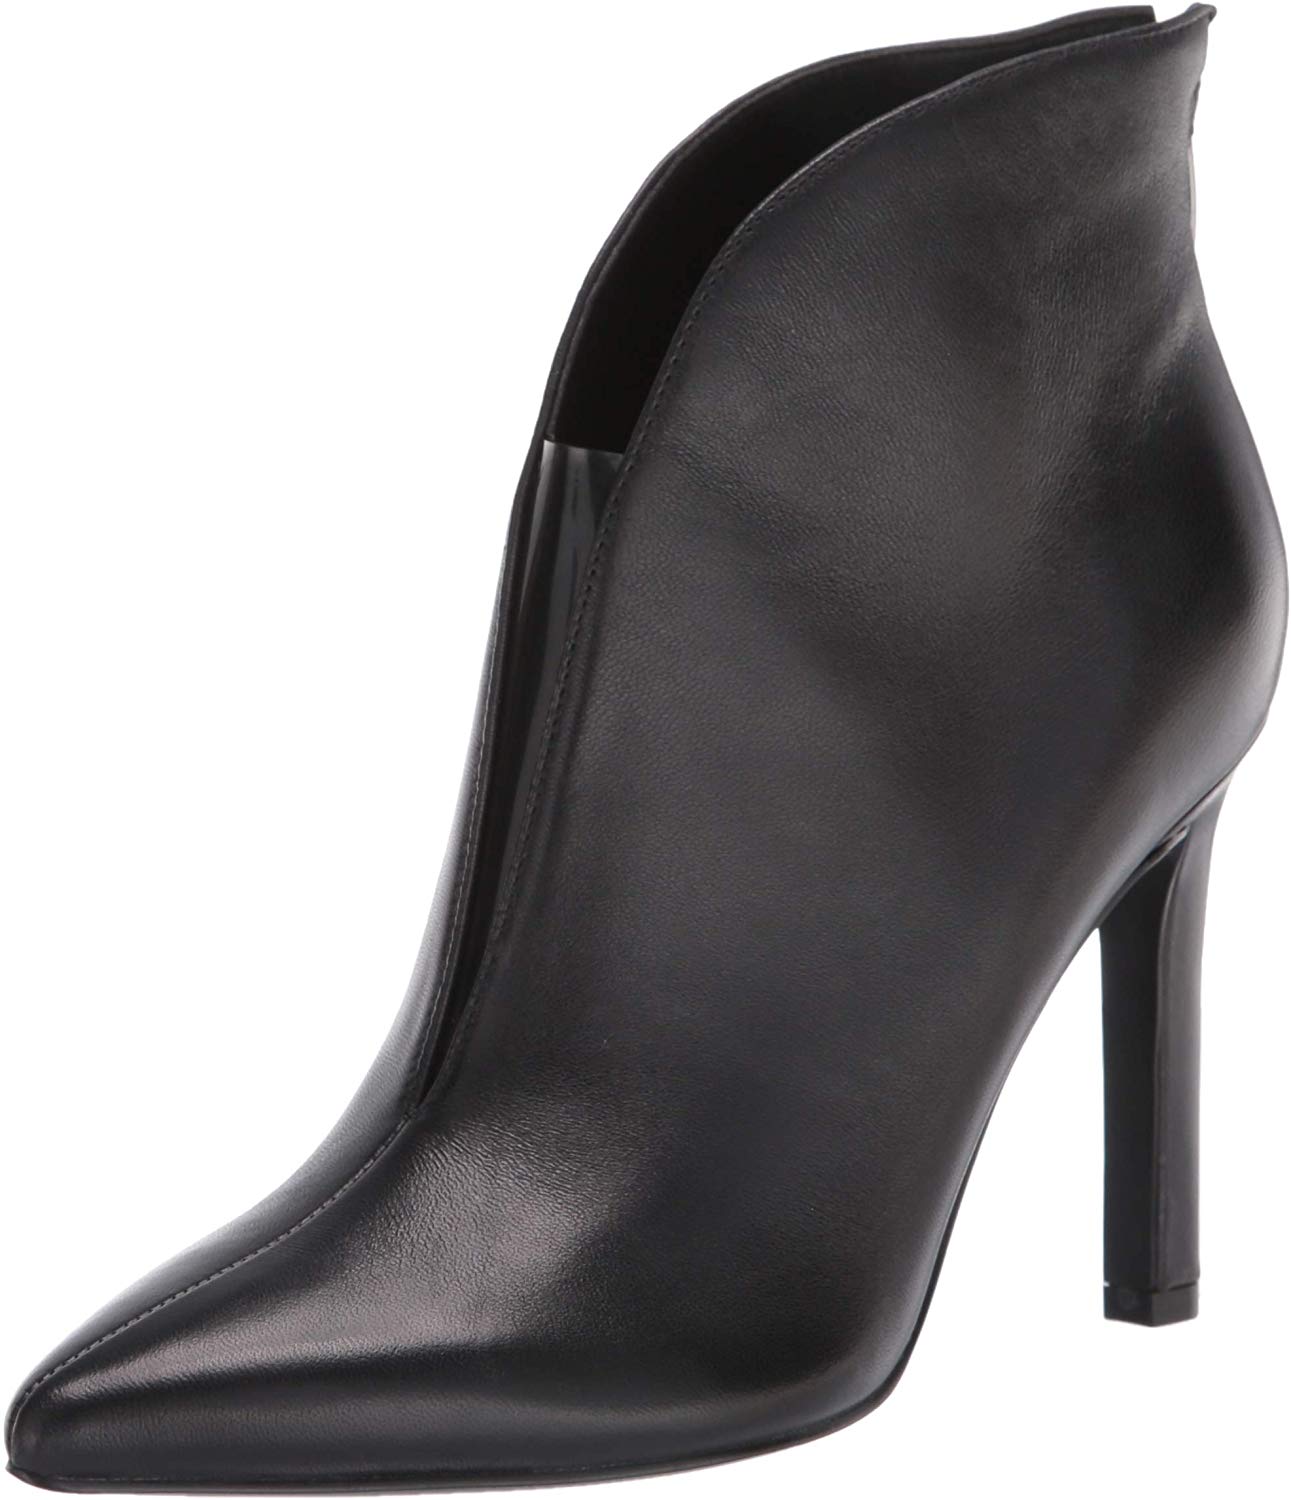 NINE WEST Women's Danie Heel Booties Fashion Boot, Black, Size 8.0 r1gx ...